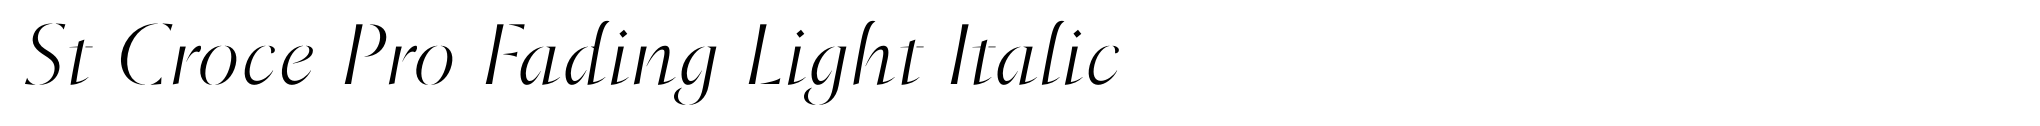 St Croce Pro Fading Light Italic image